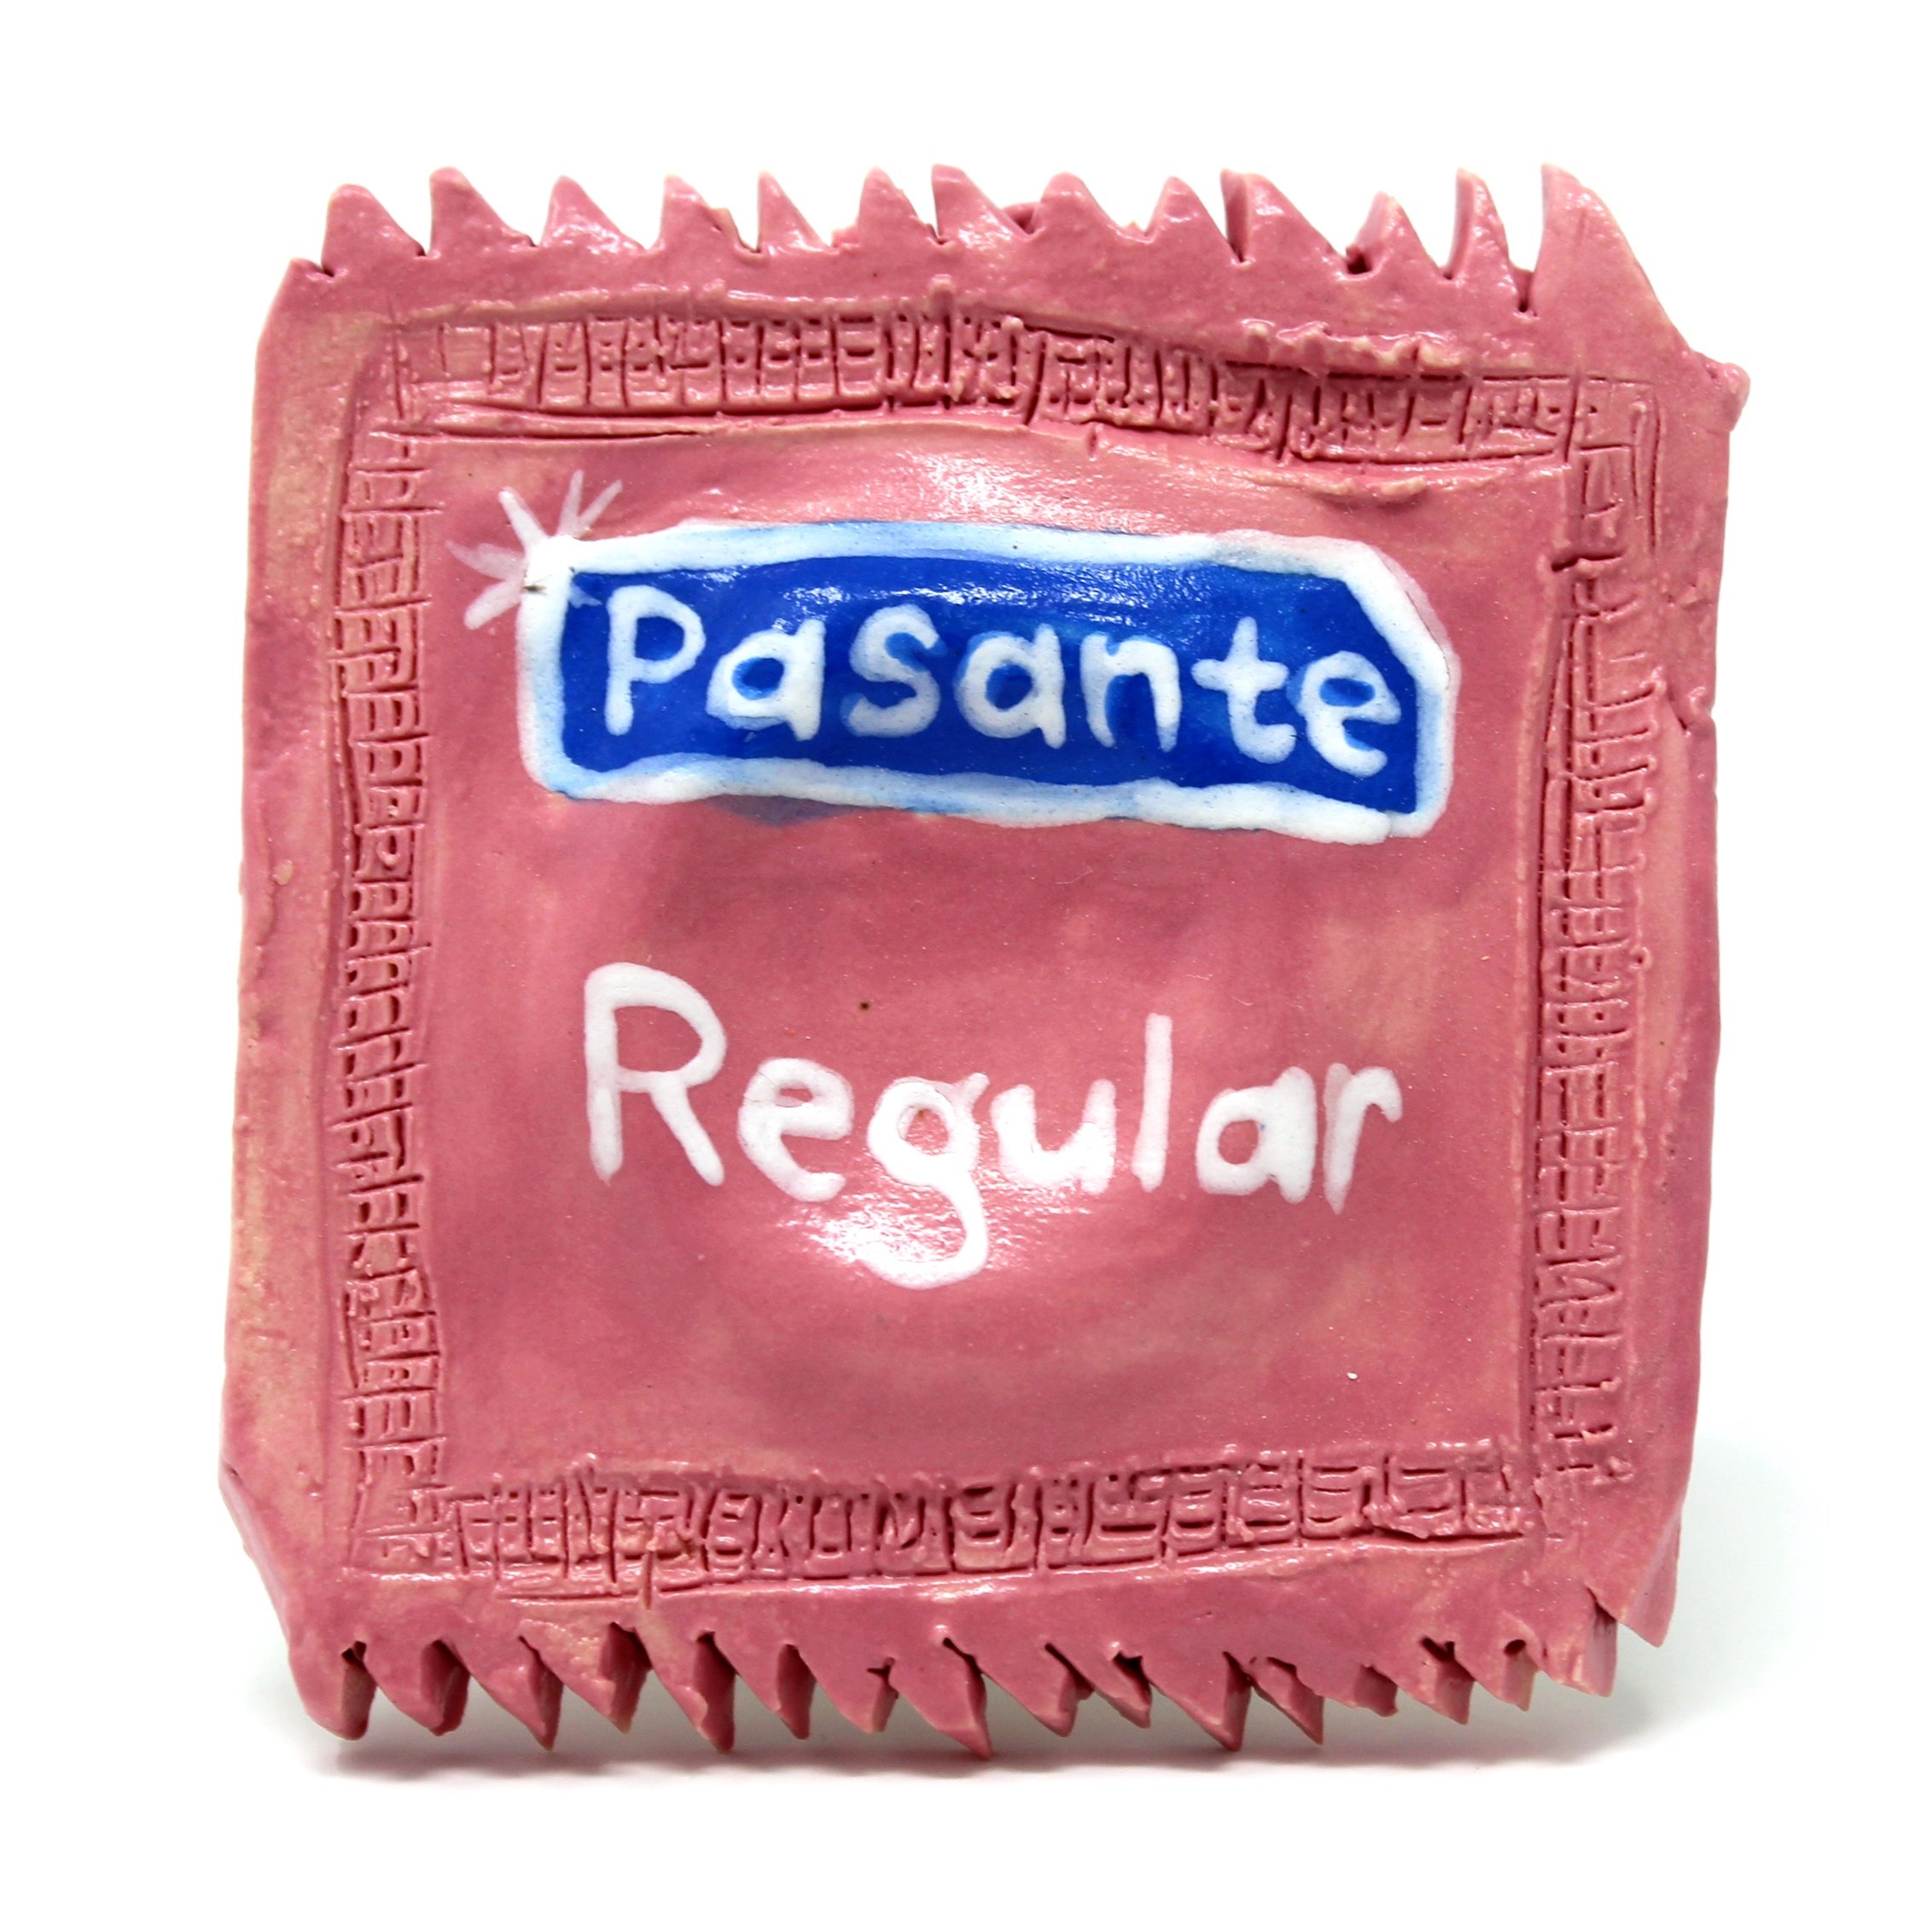 Pasante Regular Condom